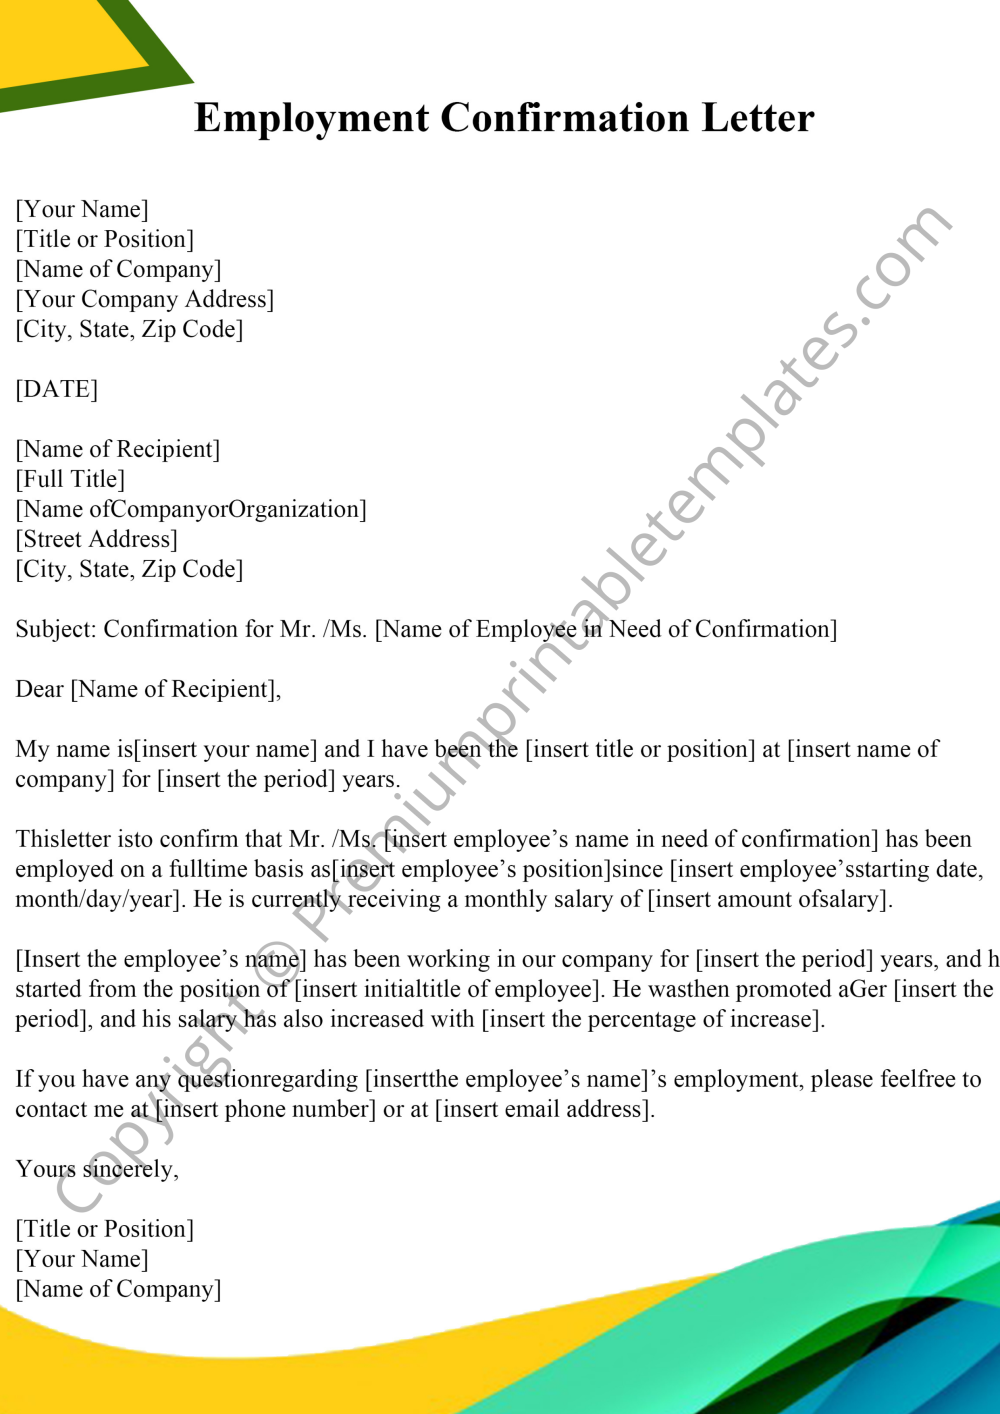 Employment Confirmation Letter PDF